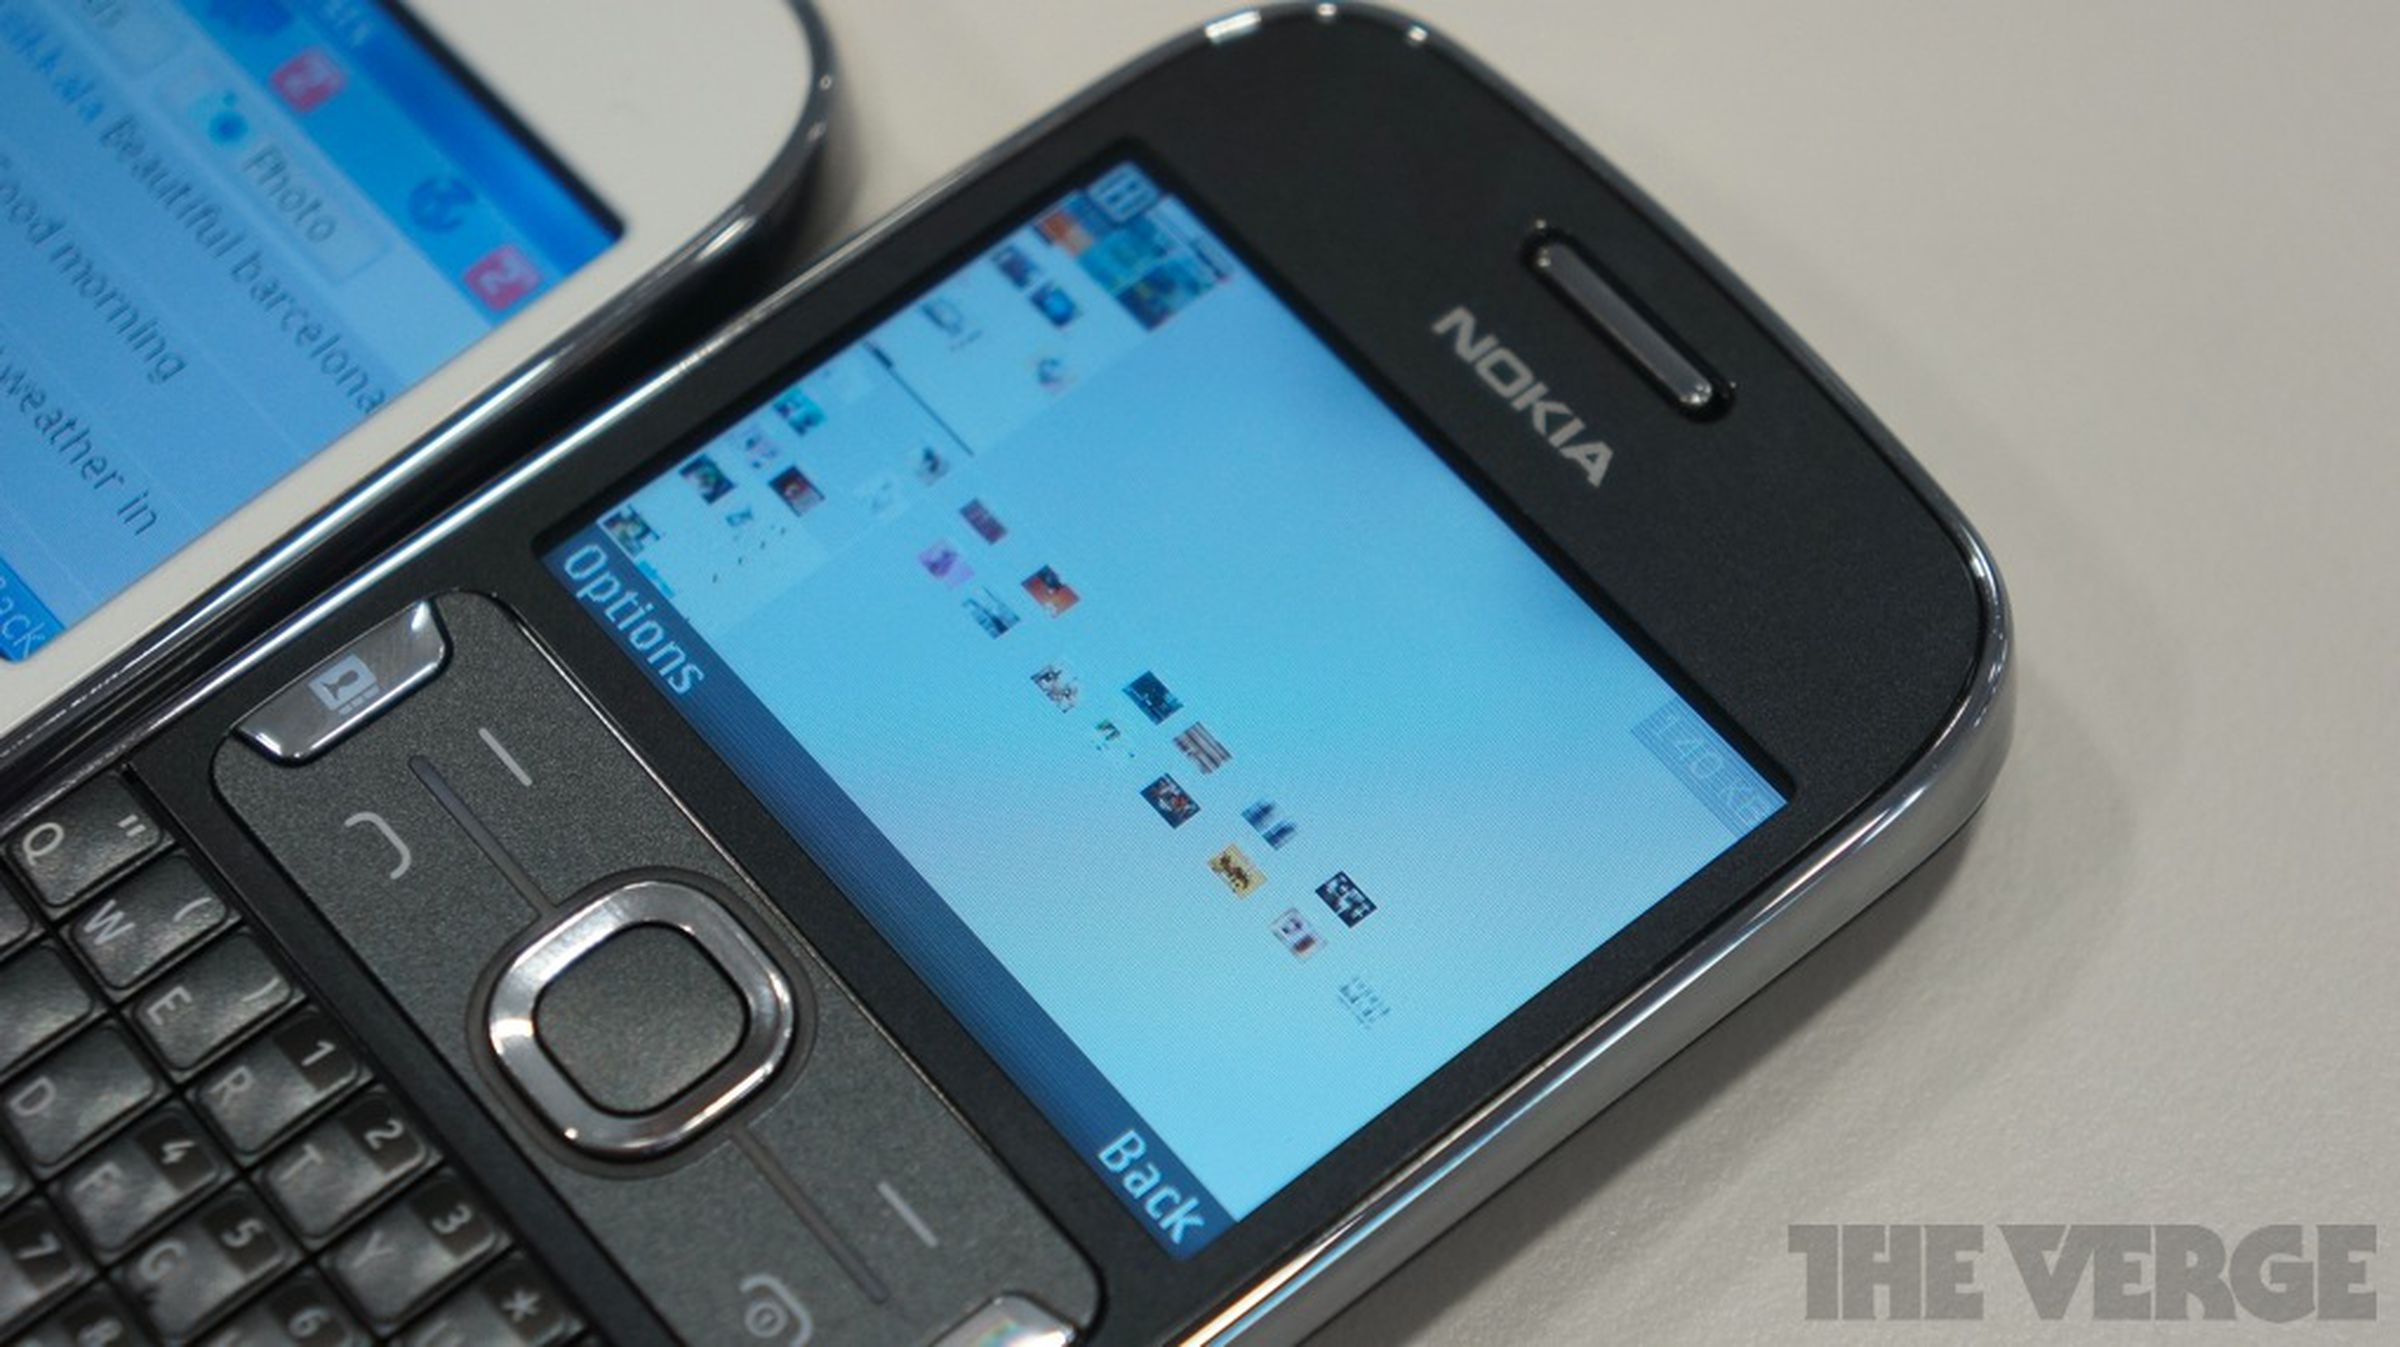 Nokia Asha 302 and 202/203 hands-on photos